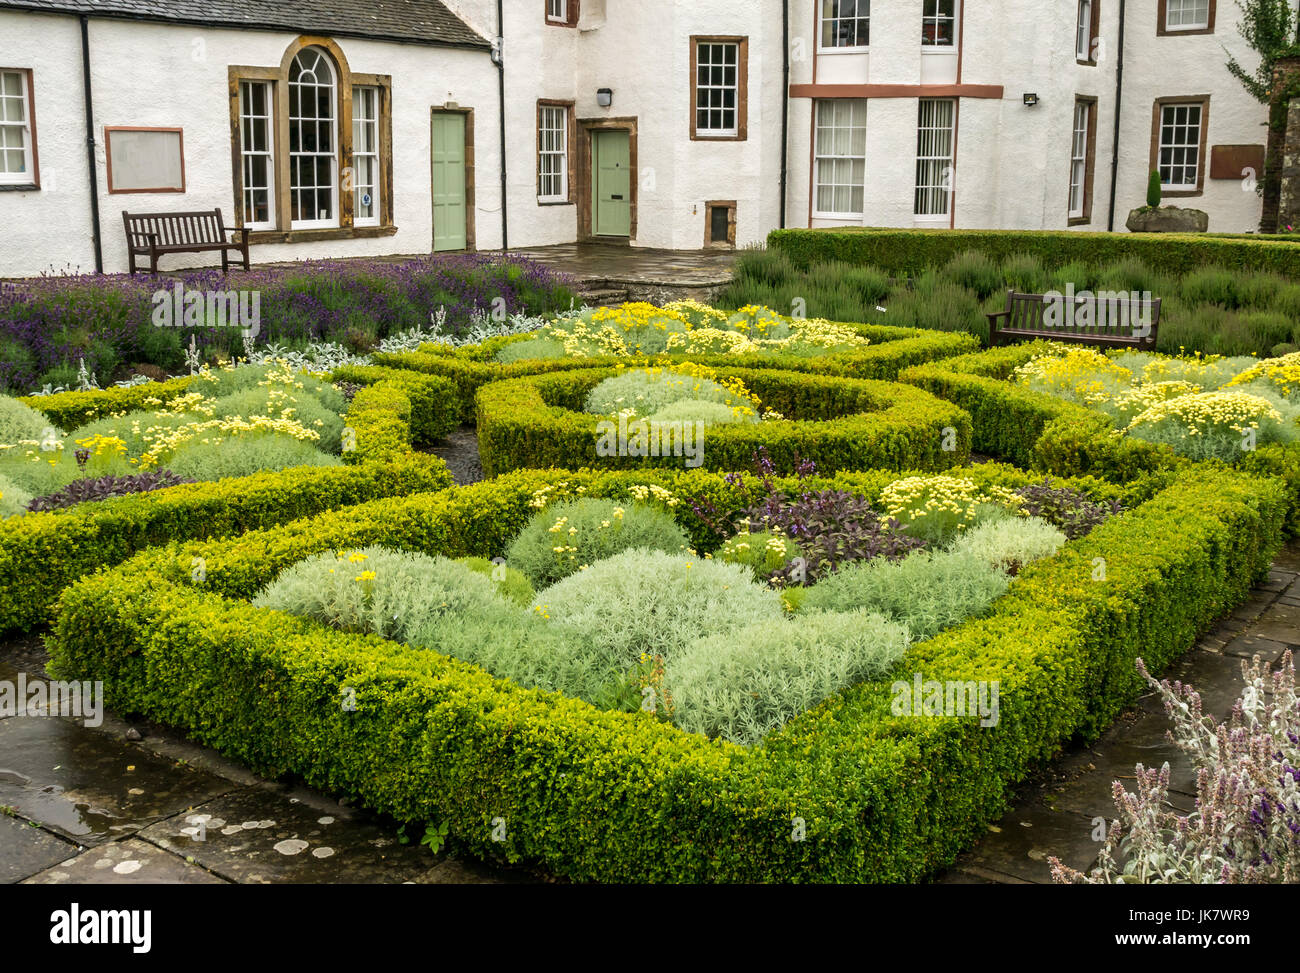 Formale Sunken Garden und Haddington House, St Mary's Pleasance Garten, Haddington, East Lothian, Schottland, Großbritannien Stockfoto